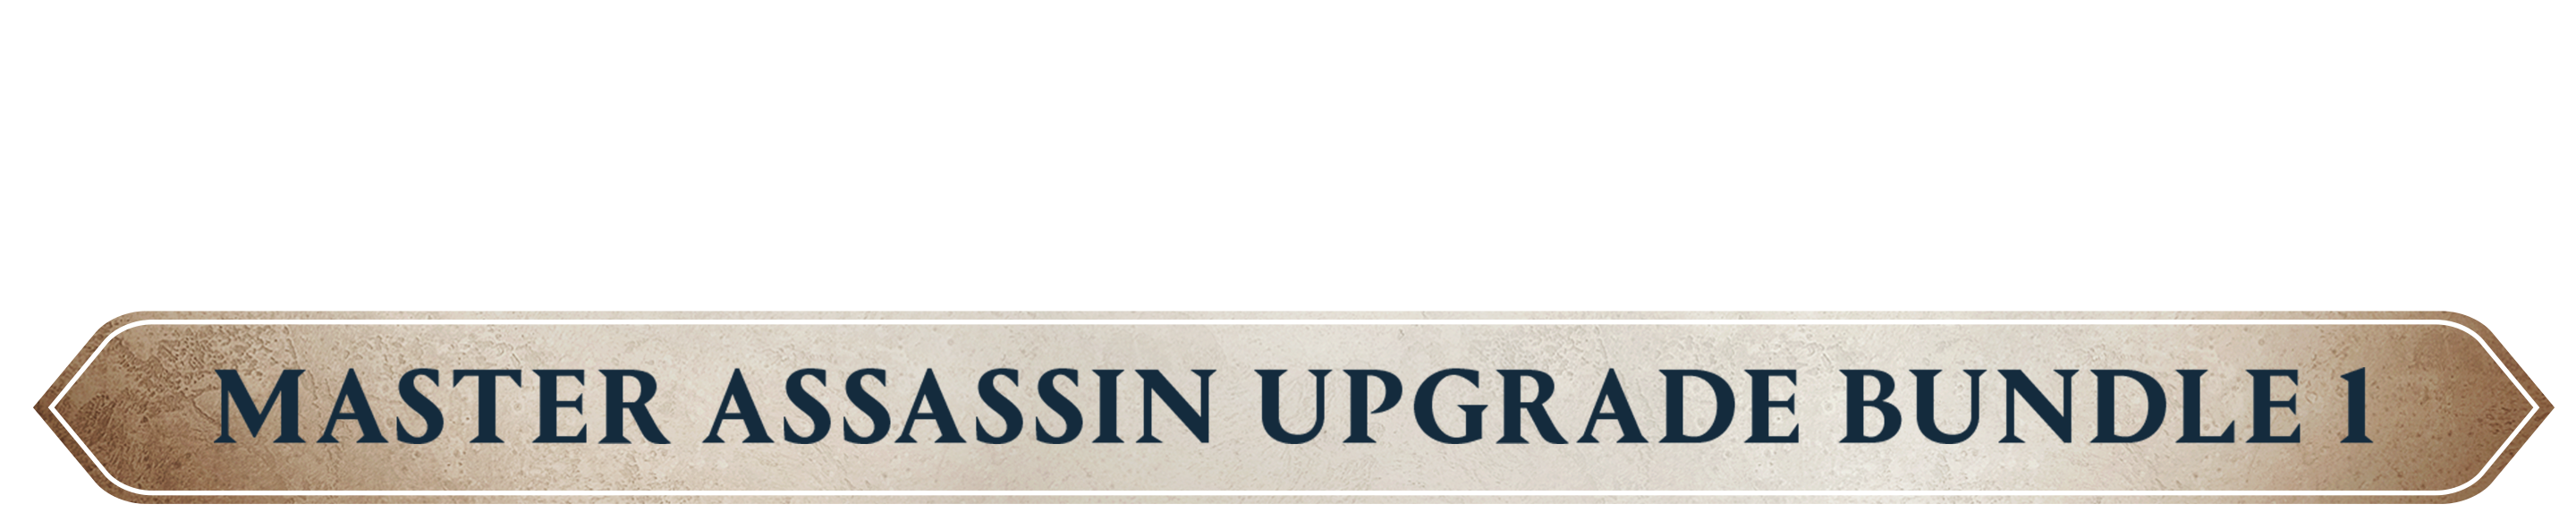 Assassin’s Creed Mirage Master Assassin Upgrade Bundle 2